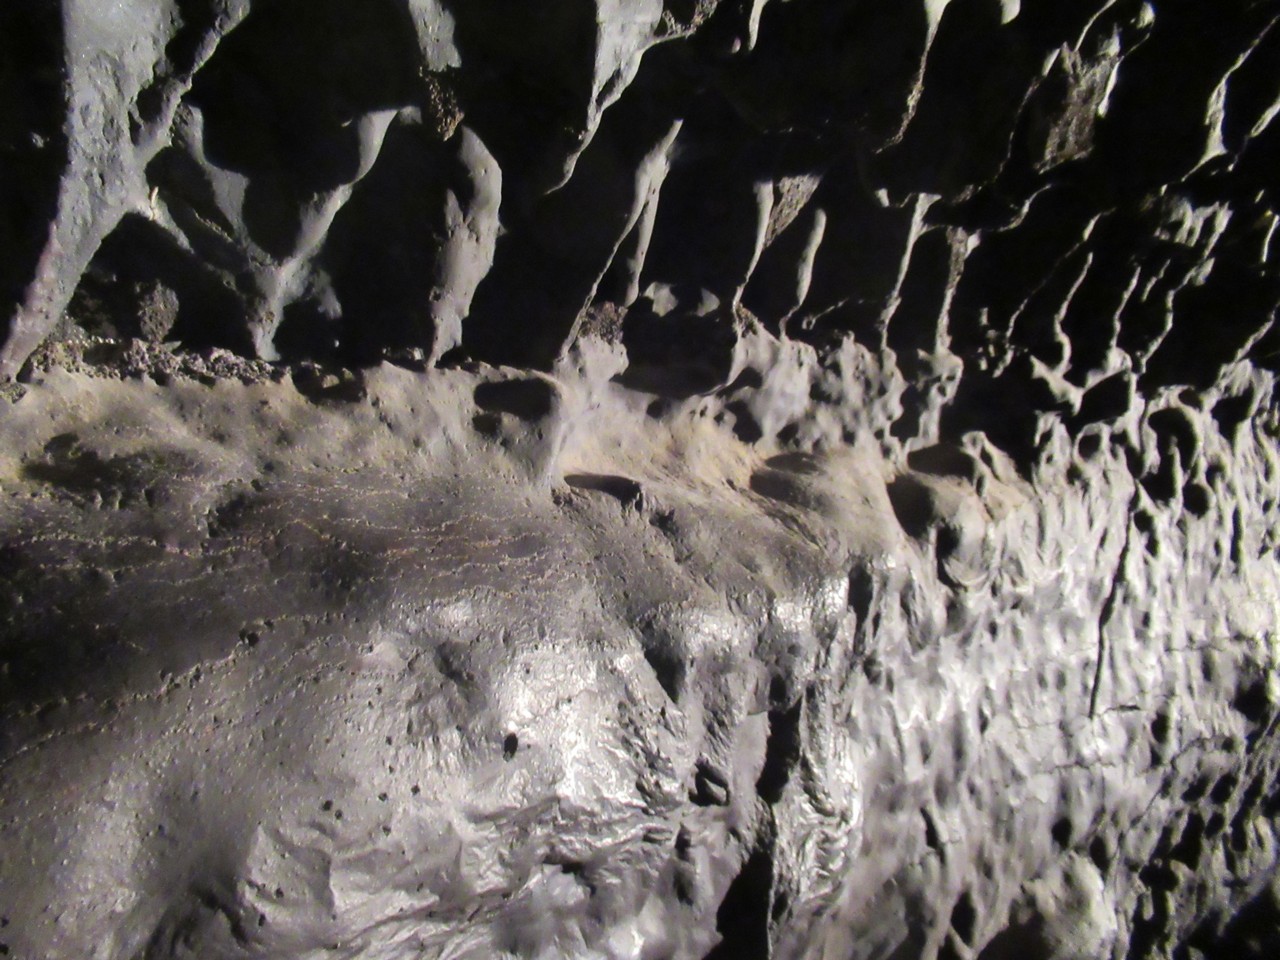 The lava slides down vertical surfaces.